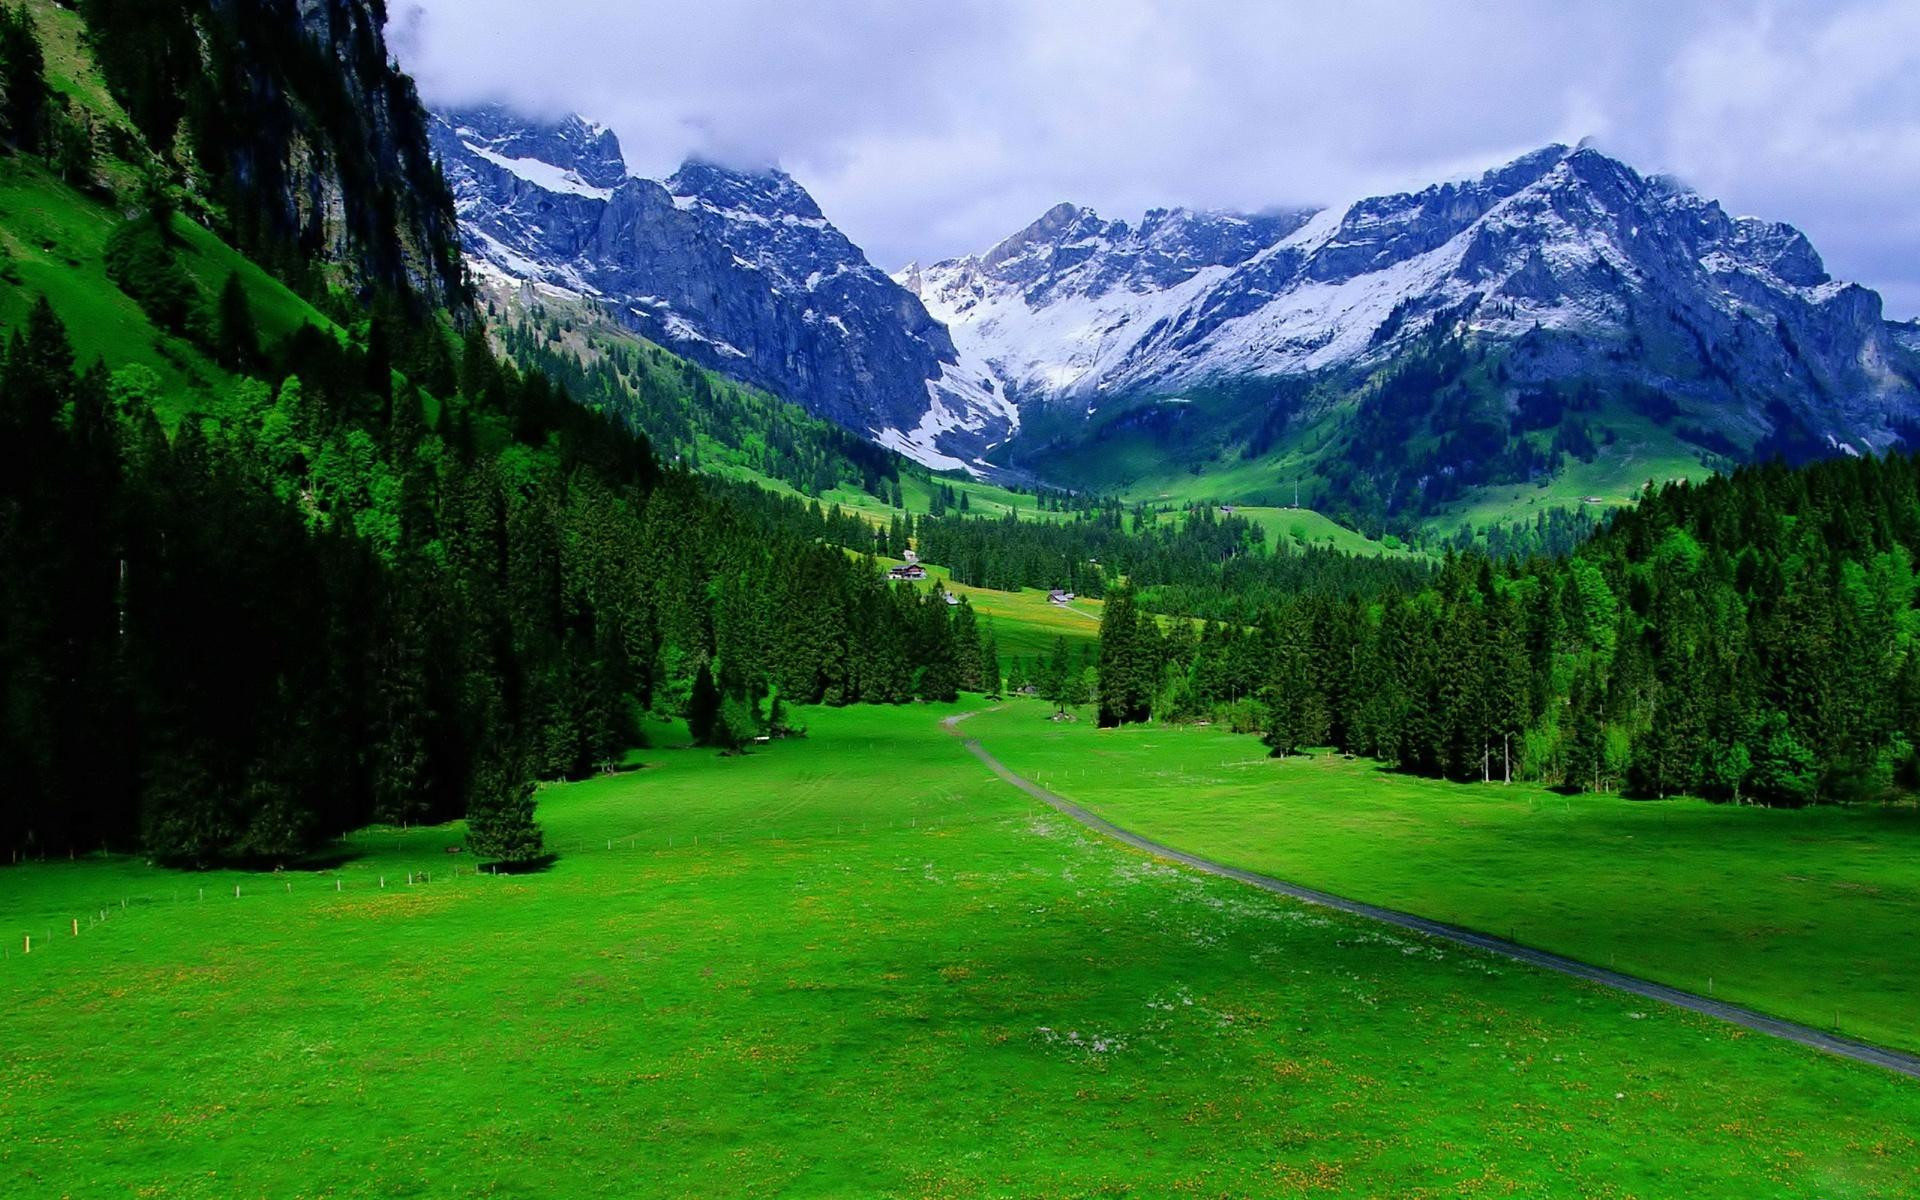 mountains, forest, green grass, beautiful landscape, path, nature, горы, лес, зеленая трава, красивый пейзаж, тропинка, природа